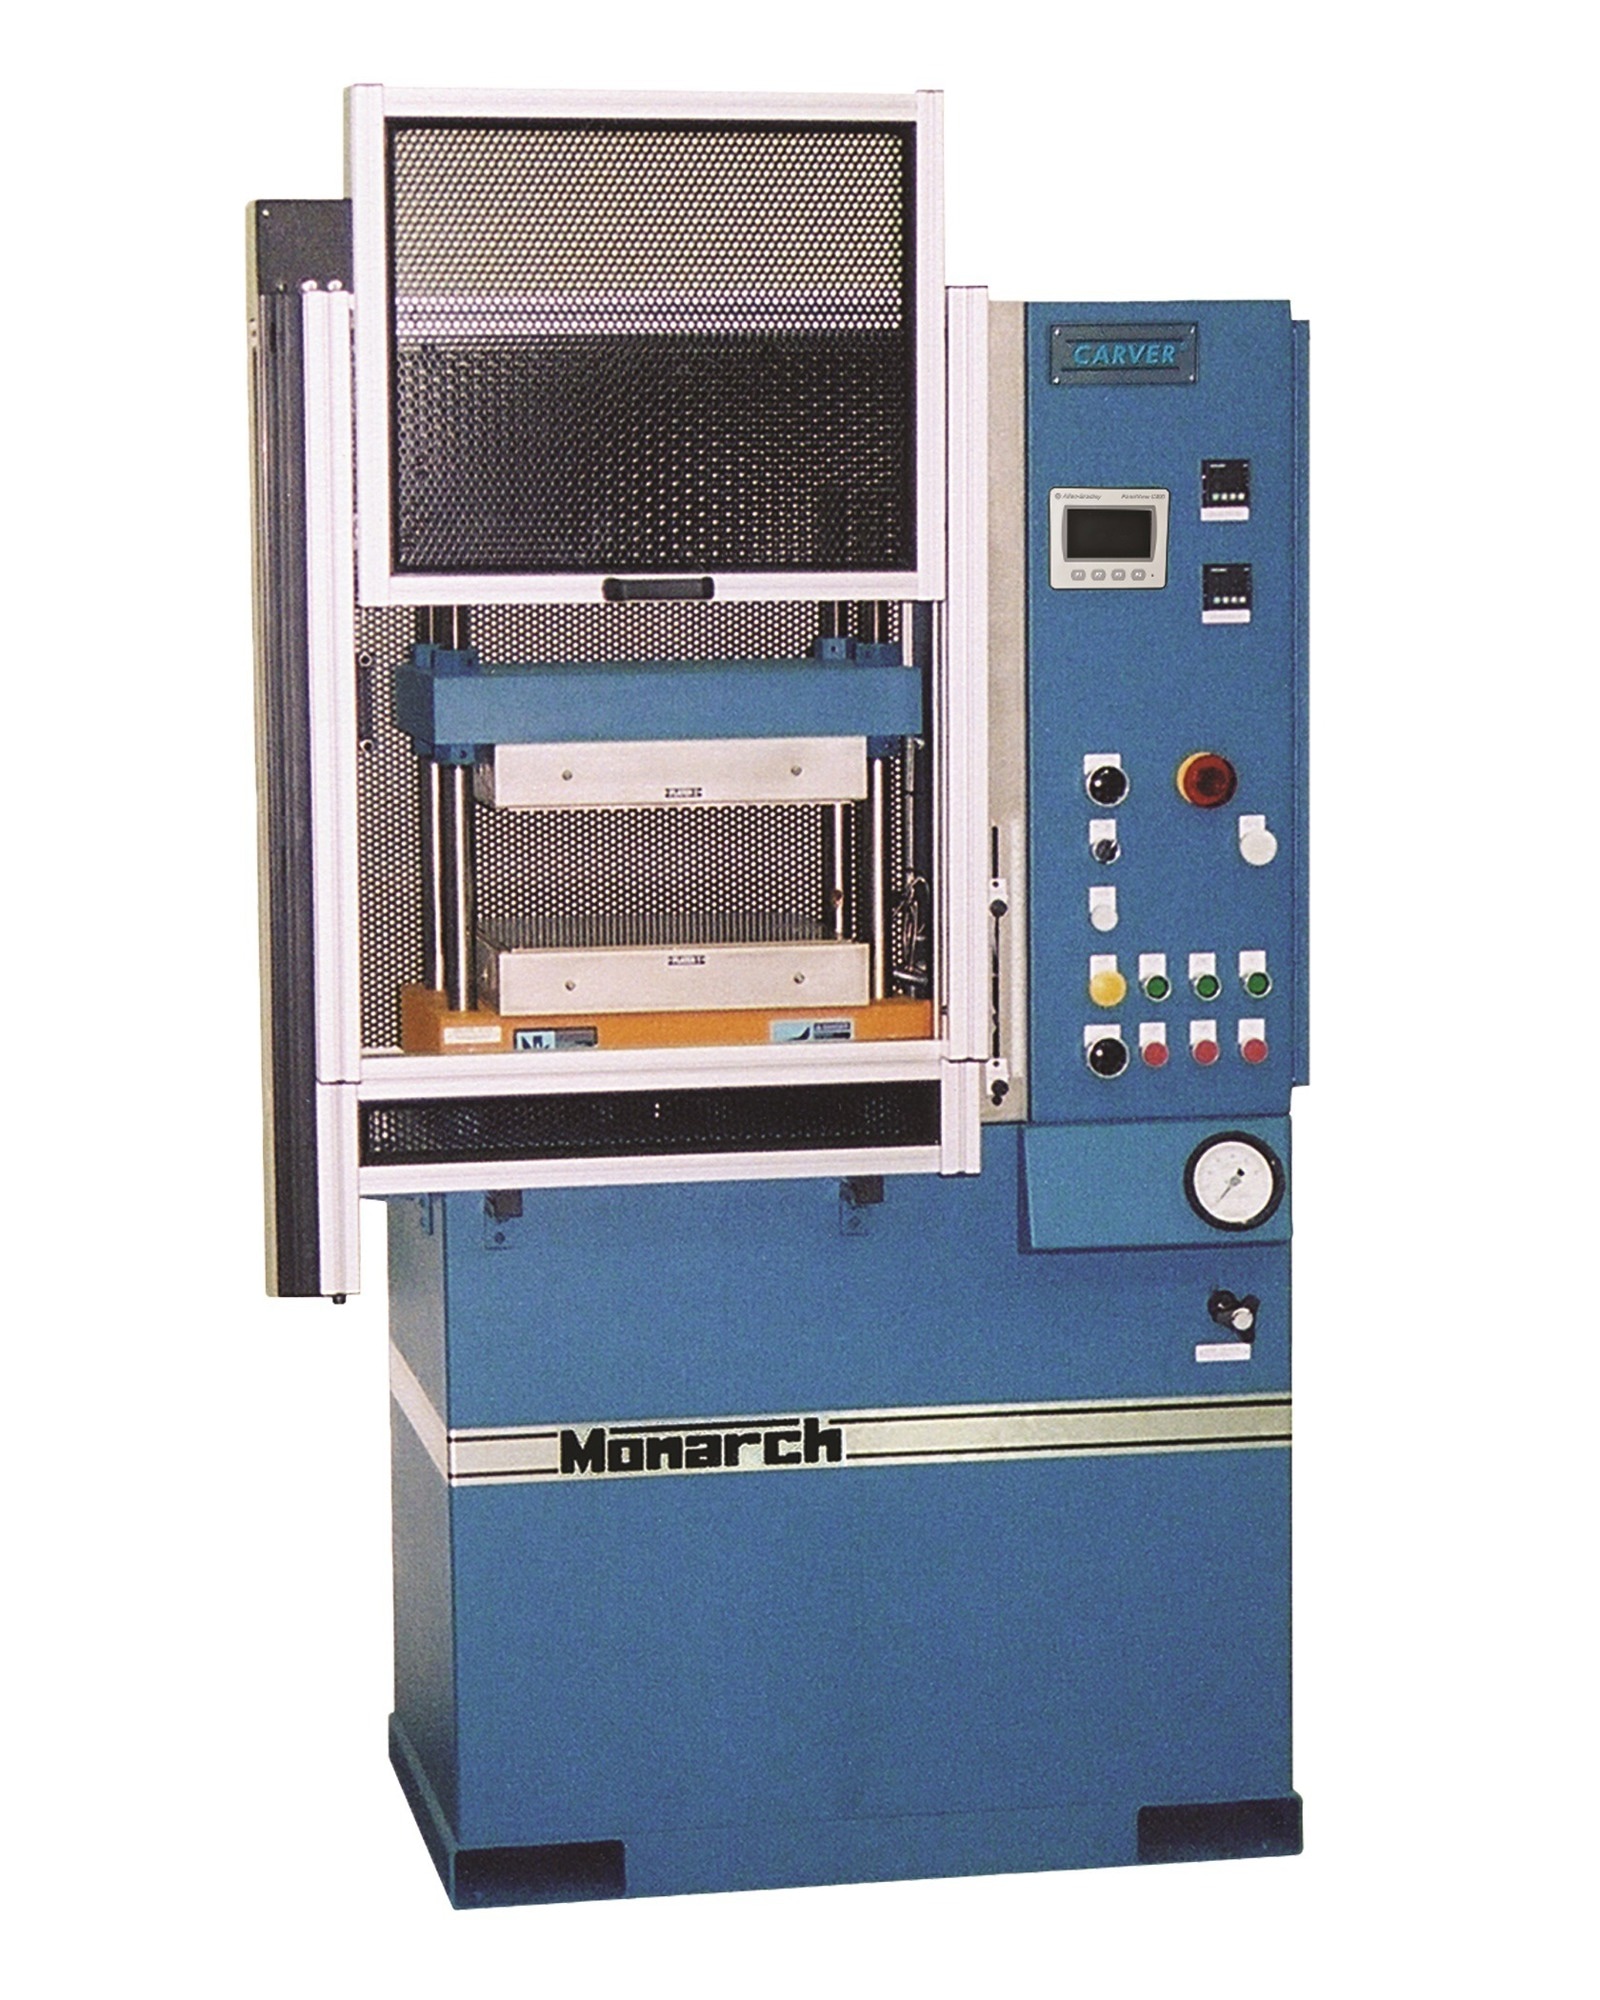 Monarch hydraulic Lab Press. Image Credit: Carver, Inc